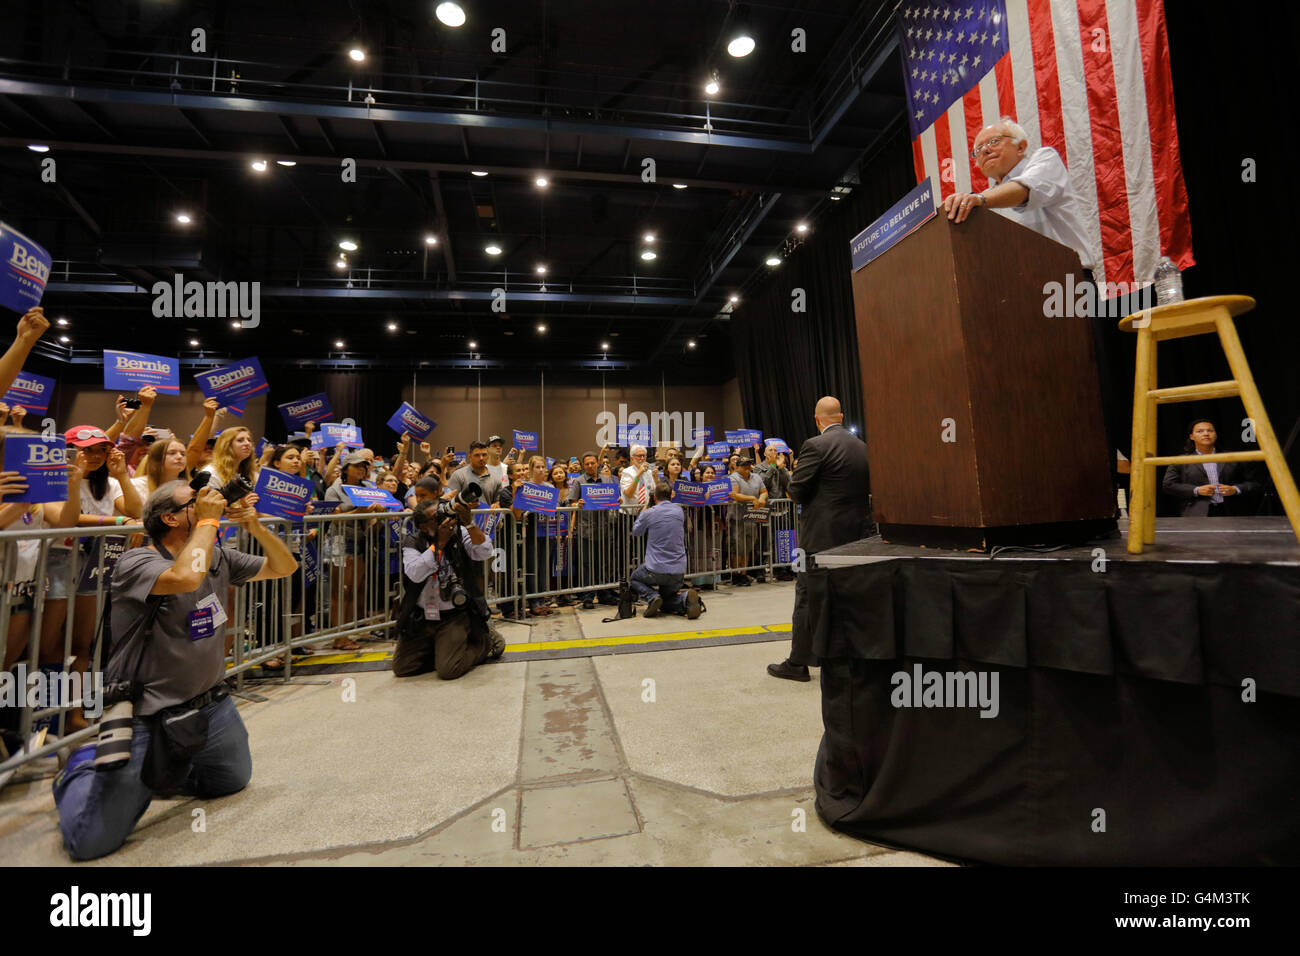 Bernie Sanders parle au Presidential Rally, Modesto, CA Banque D'Images